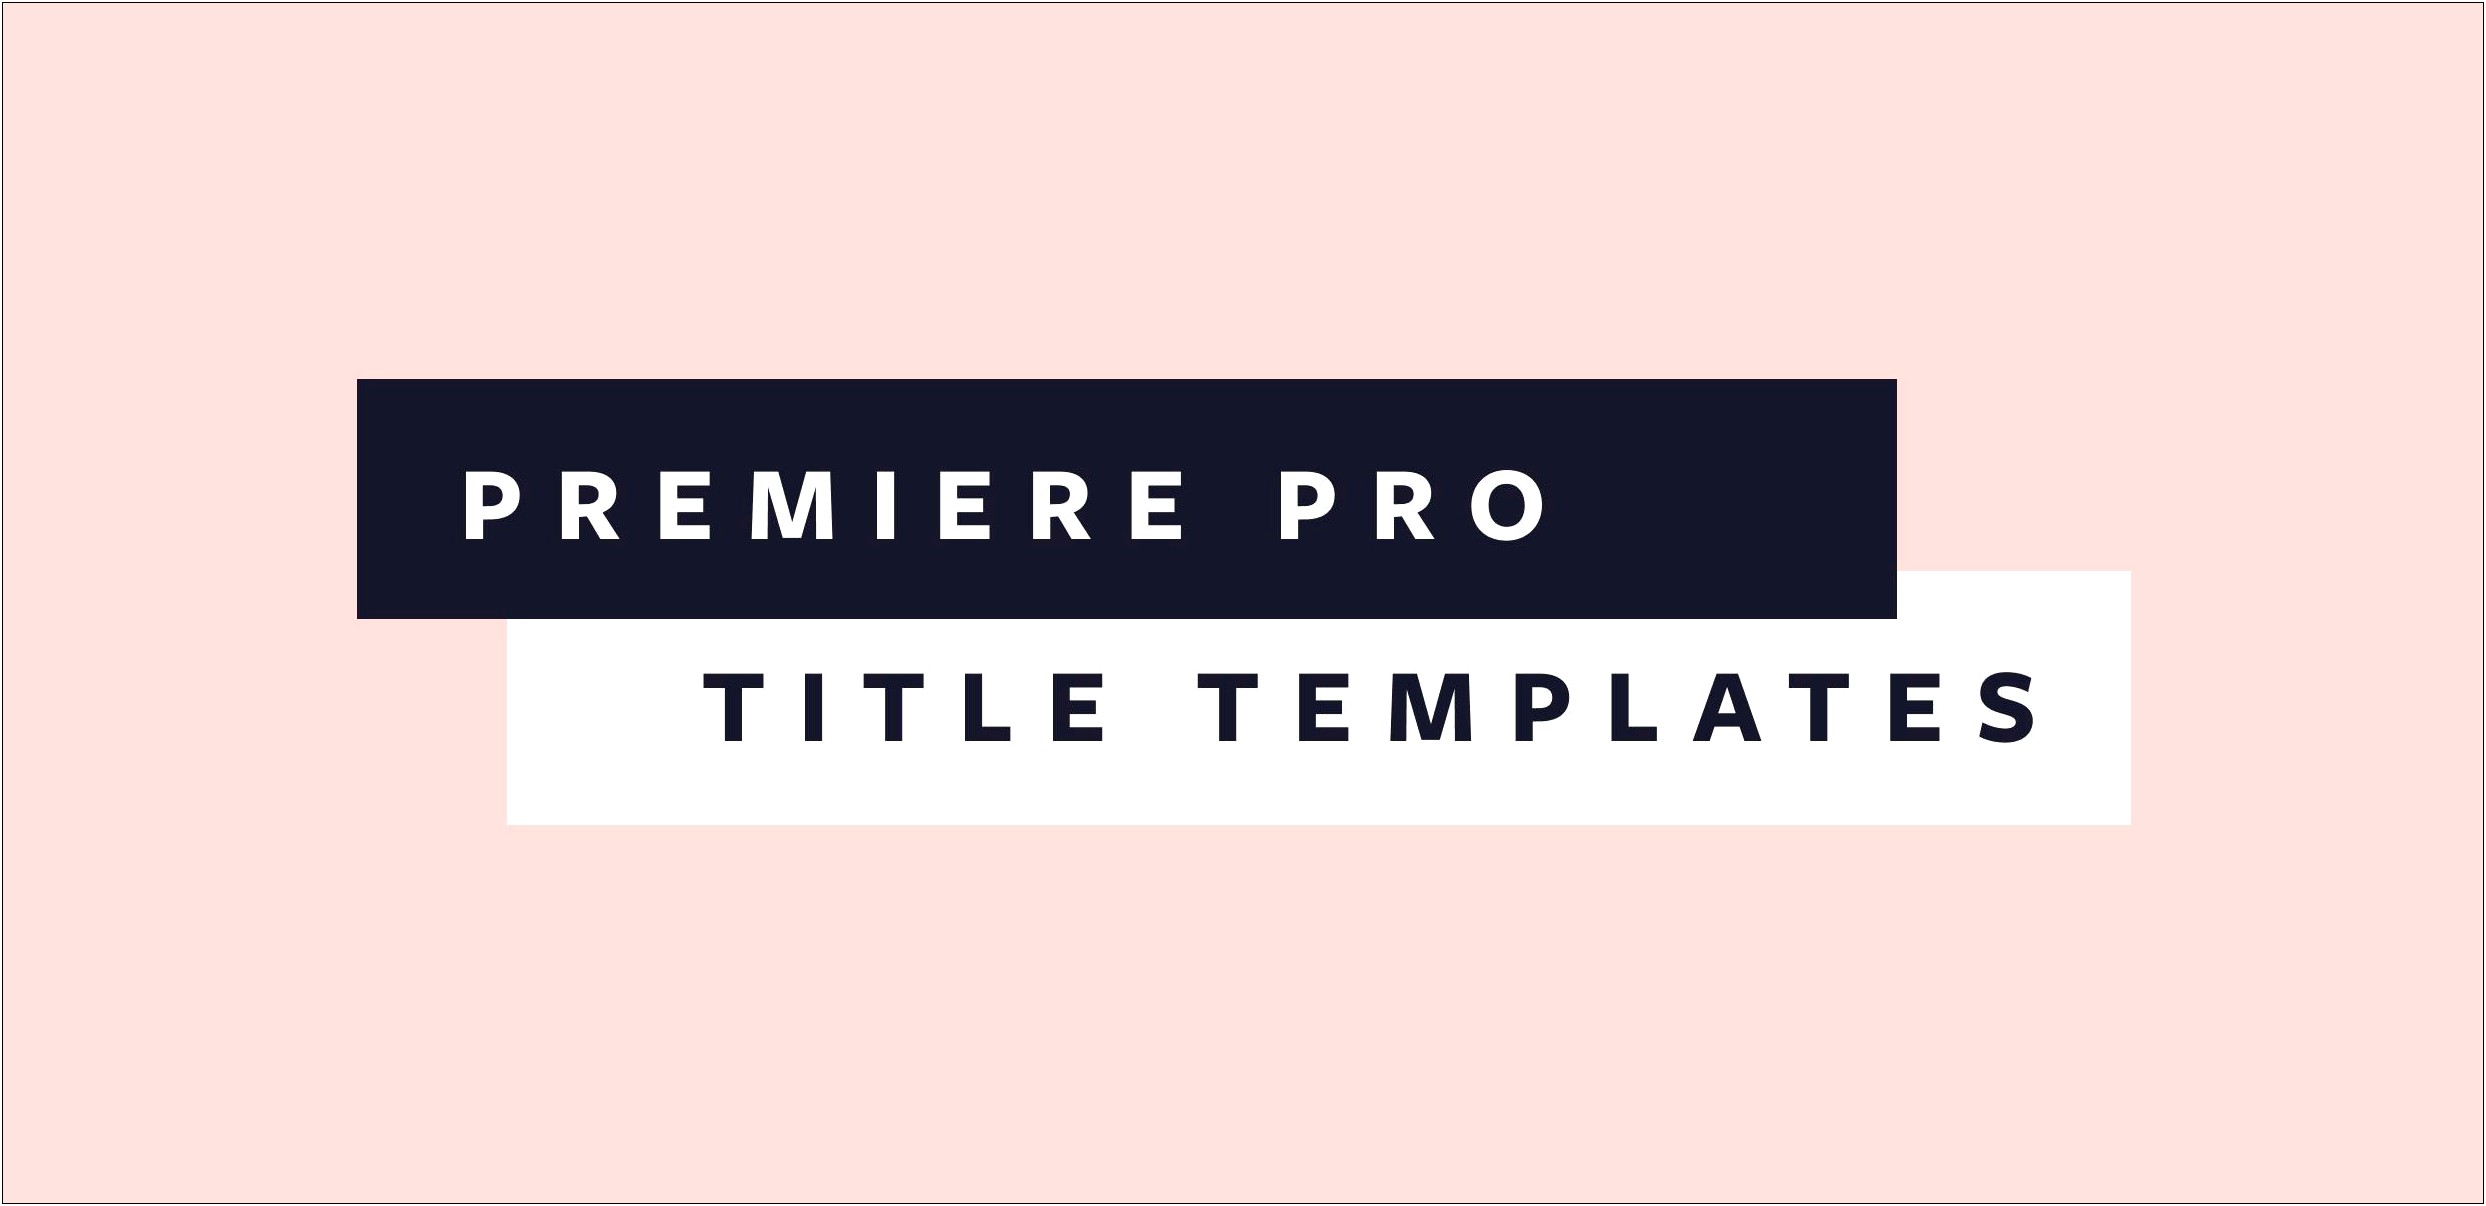 Adobe Premiere Pro Cs5 Title Templates Download